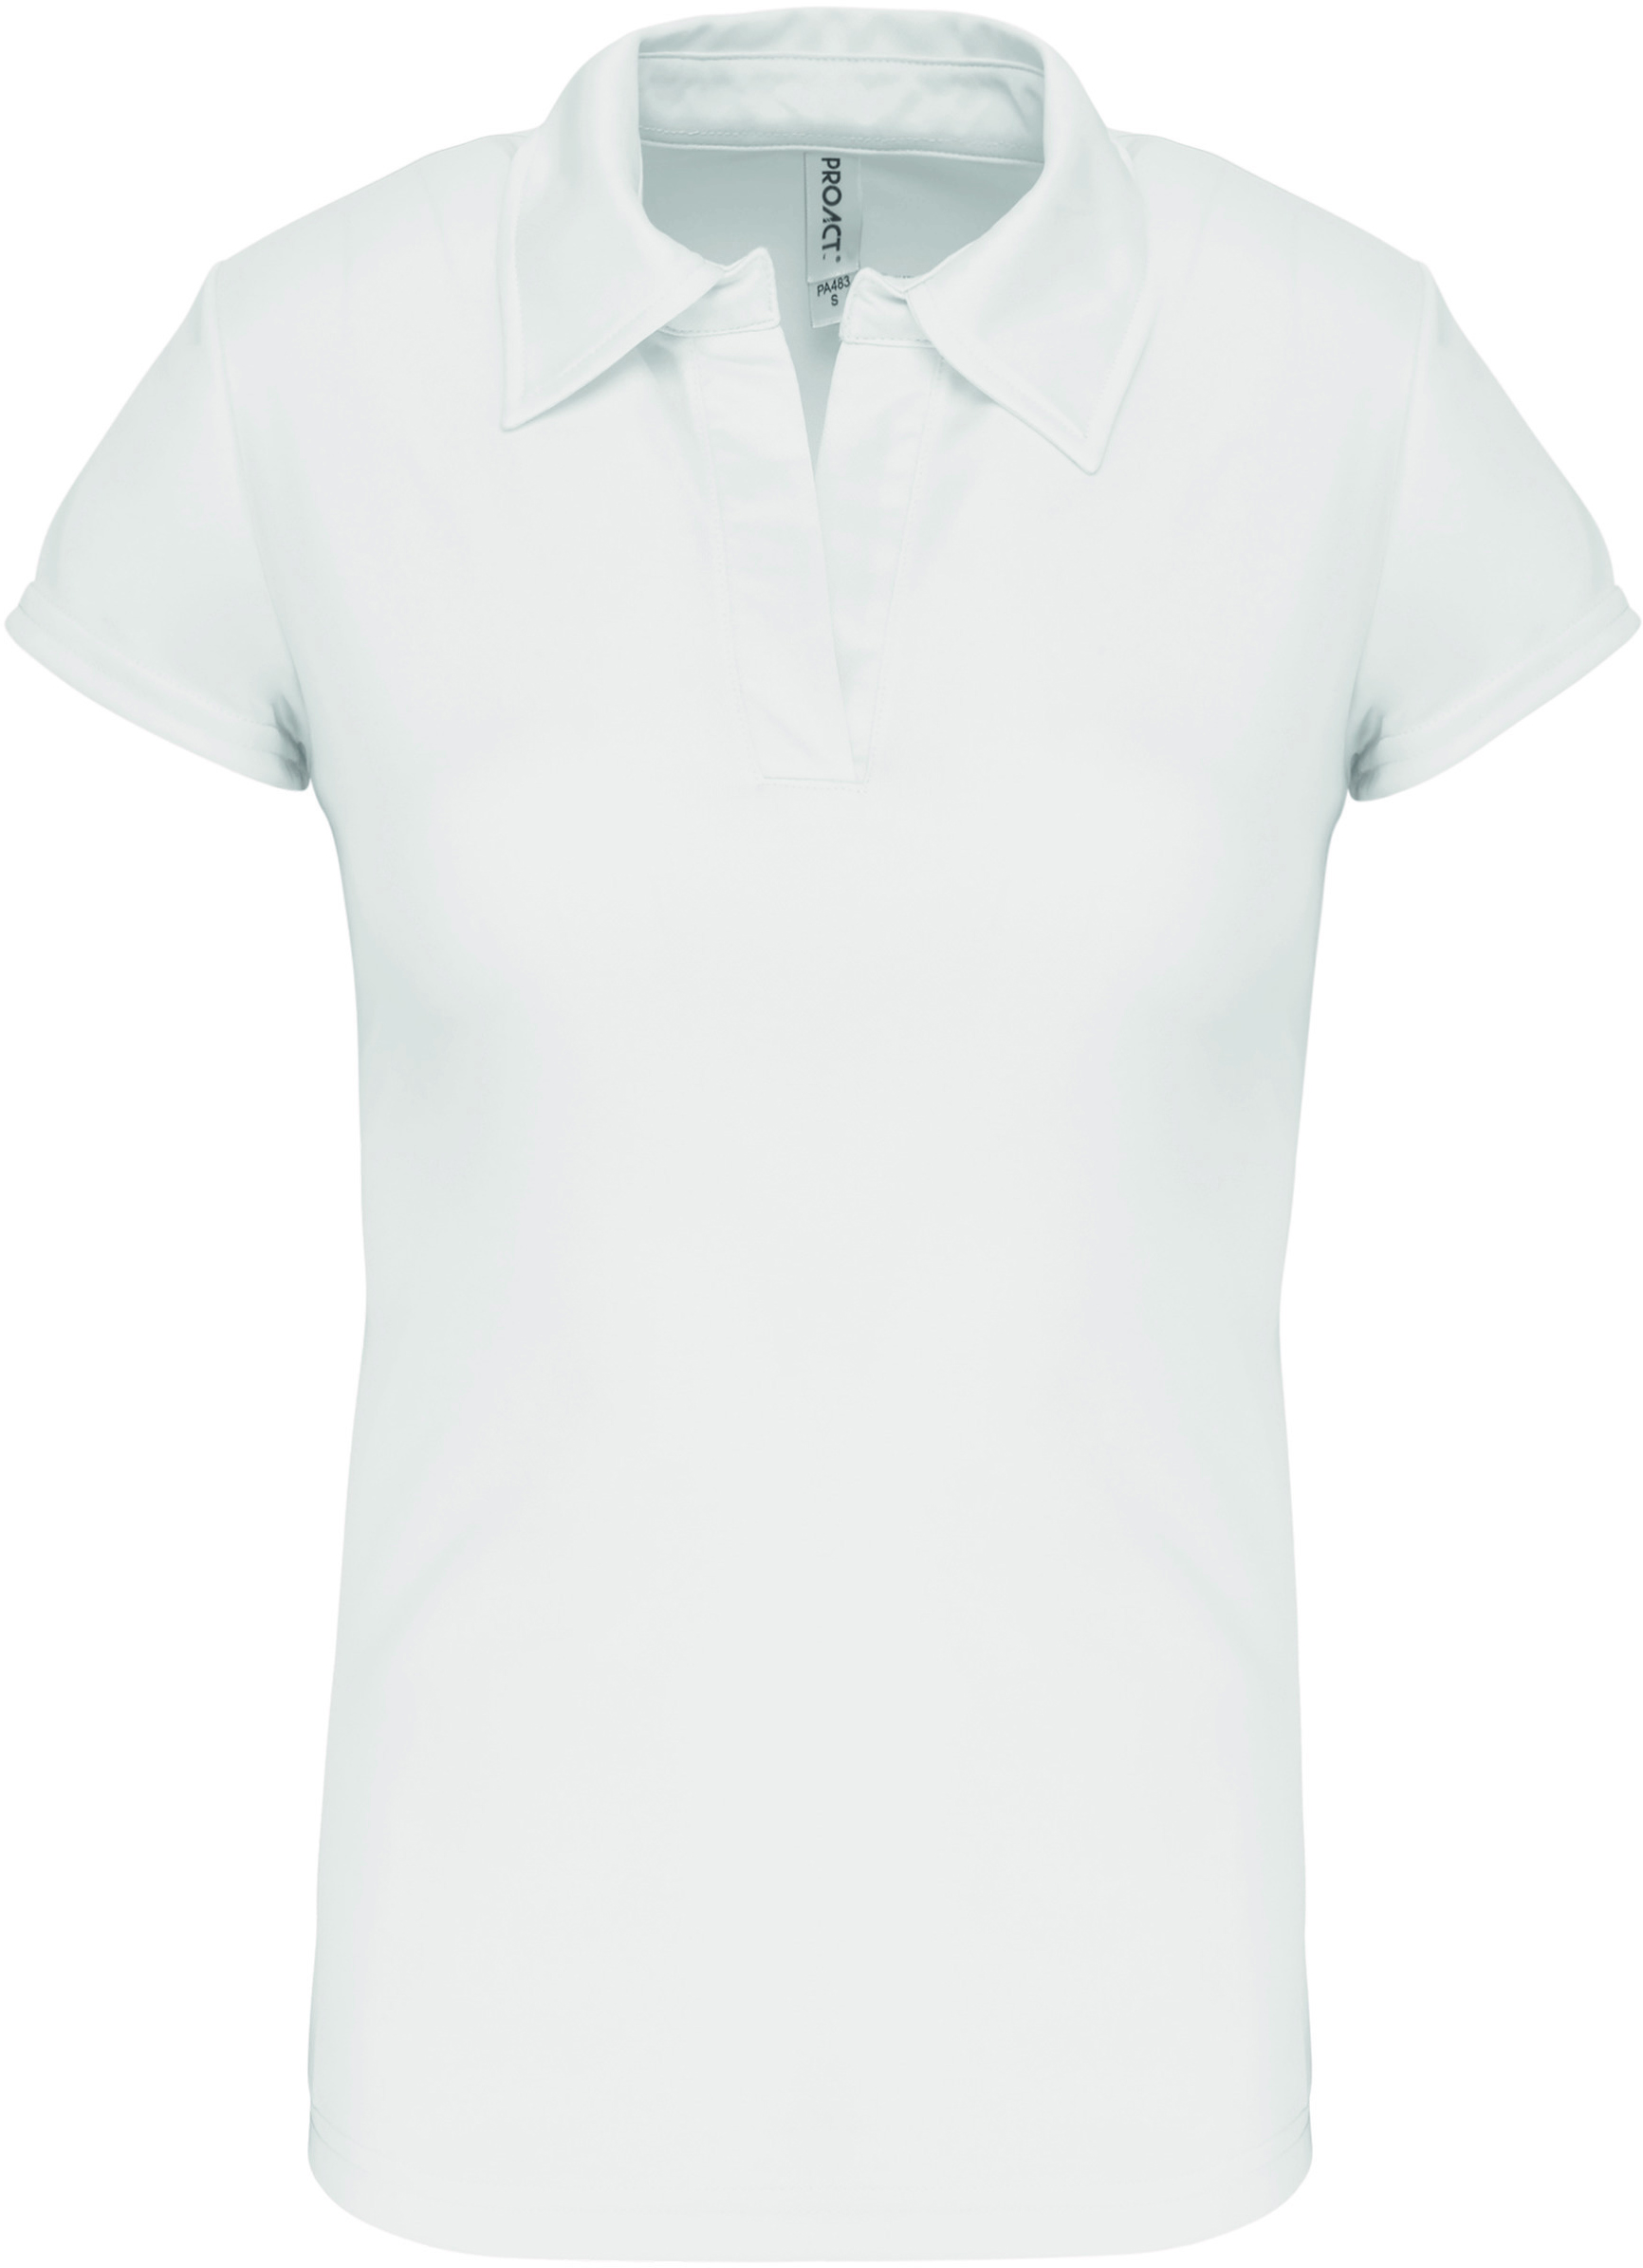 Short sleeve Quick dry polo PROACT - Marina Yacht Wear - Yacht uniforms